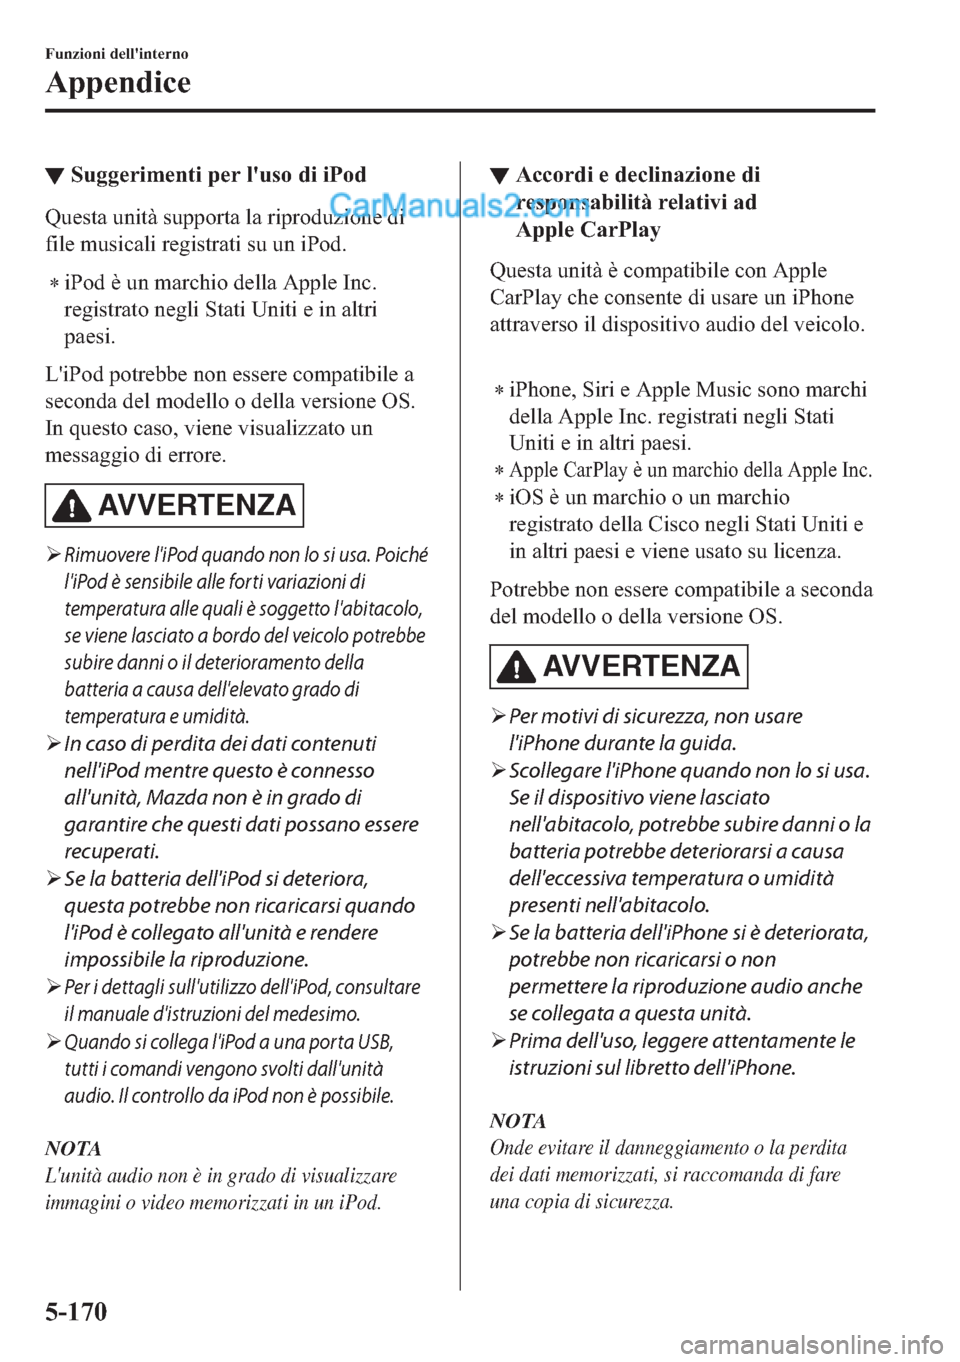 MAZDA MODEL 2 2019  Manuale del proprietario (in Italian) ▼�6�X�J�J�H�U�L�P�H�Q�W�L��S�H�U��O�
�X�V�R��G�L��L�3�R�G
�4�X�H�V�W�D��X�Q�L�W�j��V�X�S�S�R�U�W�D��O�D��U�L�S�U�R�G�X�]�L�R�Q�H��G�L
�I�L�O�H��P�X�V�L�F�D�O�L��U�H�J�L�V�W�U�D�W�L��V�X�